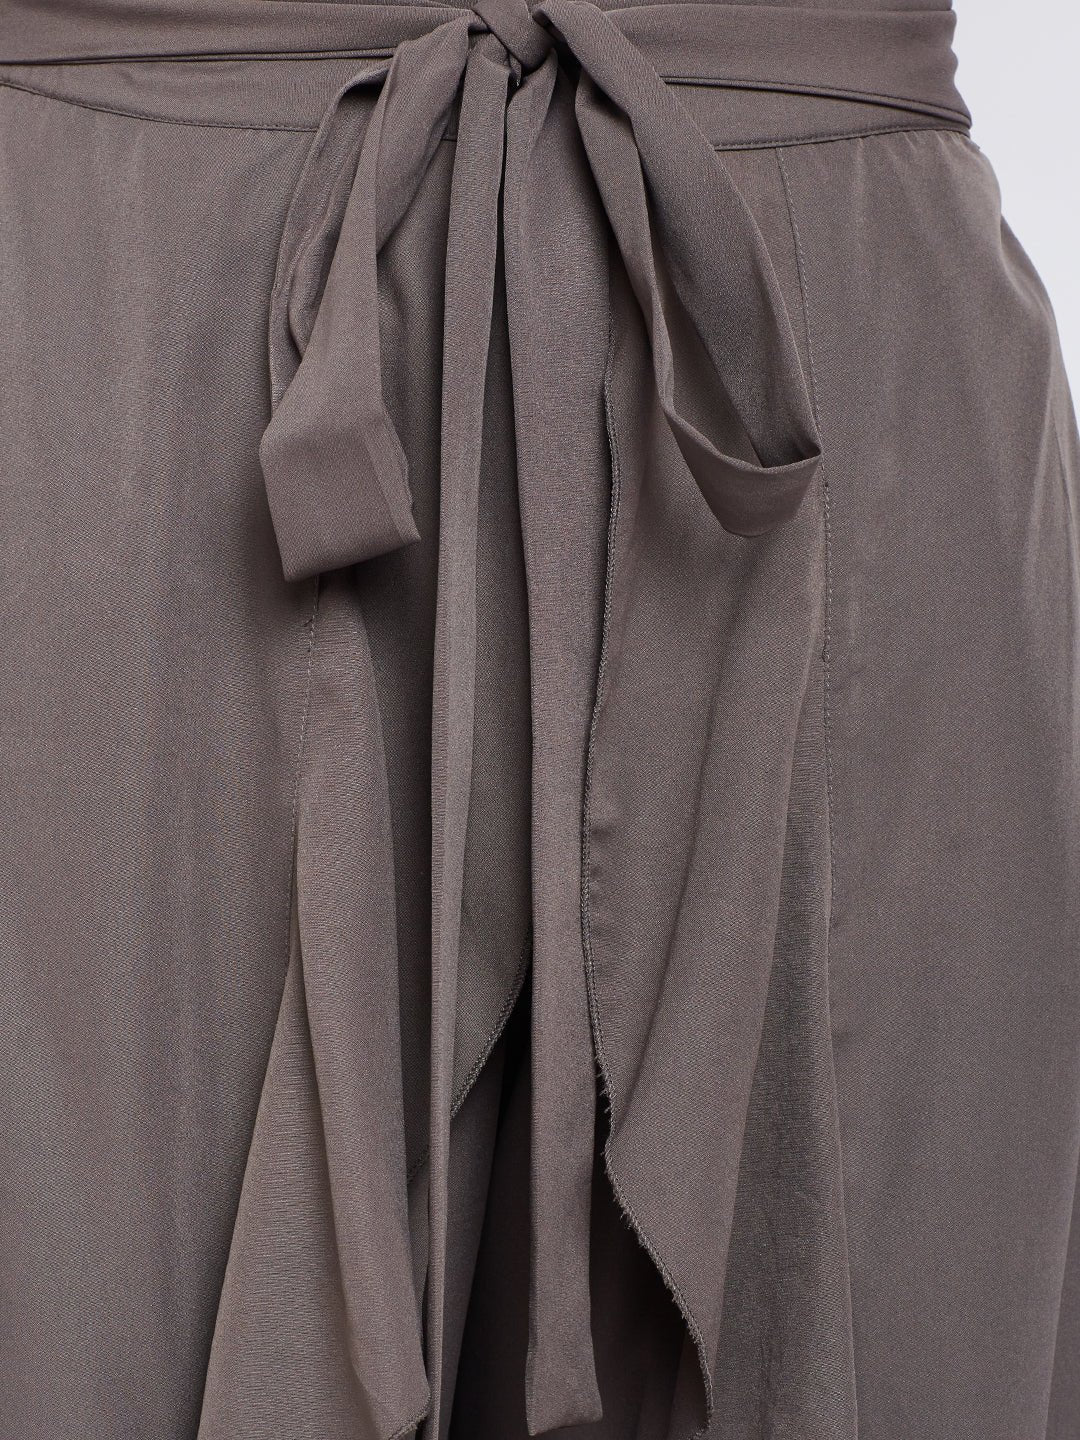 Folk Republic Women Solid Grey Waist Tie-Up Ruffled Maxi Skirt with Attached Trousers - #folk republic#